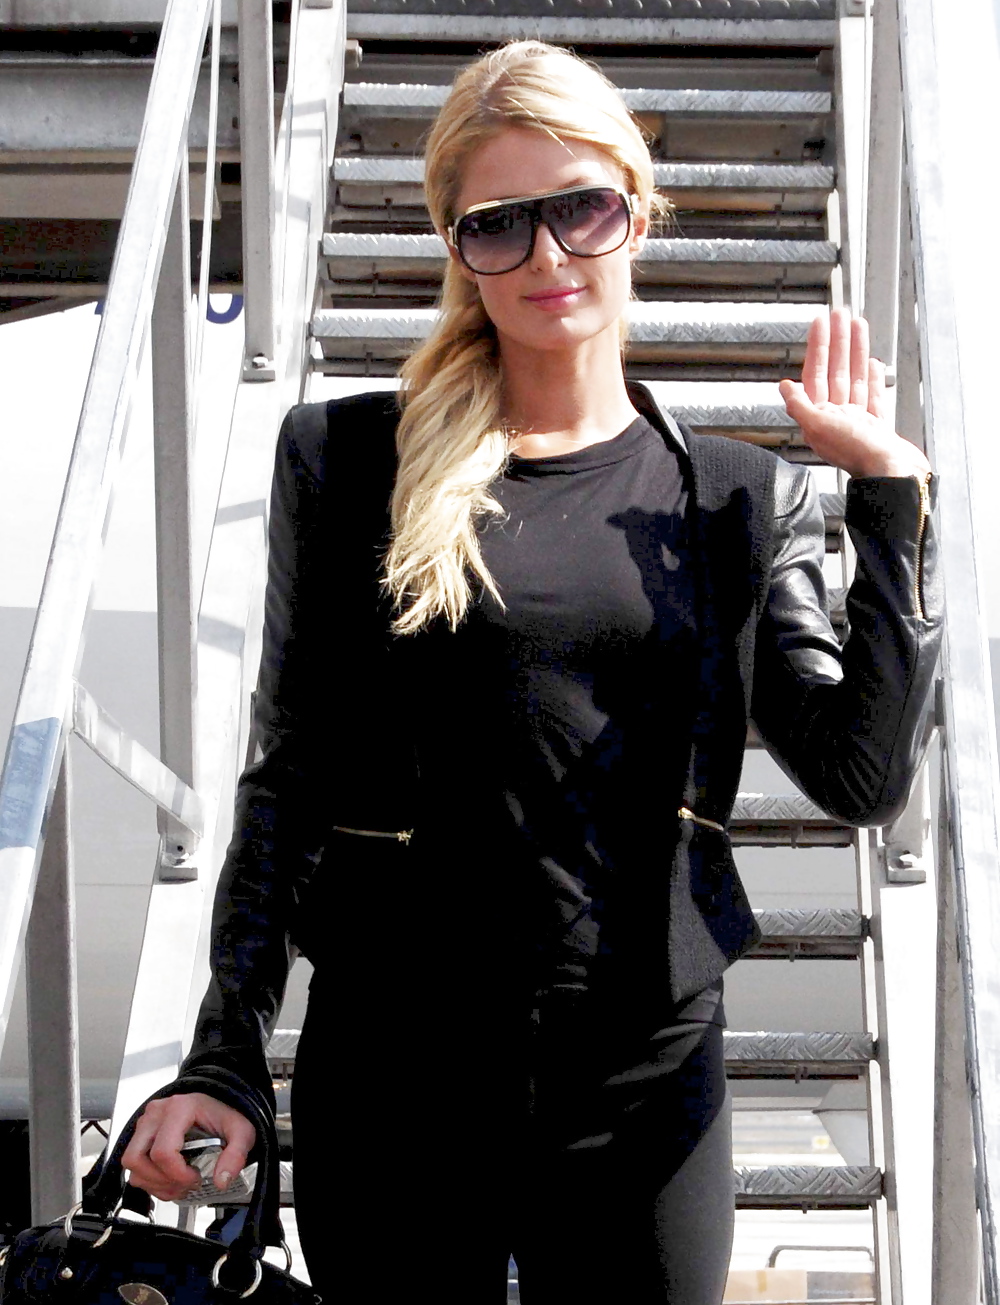 Paris Hilton Braless at the Airport Istanbul 08.10.12 #14001033